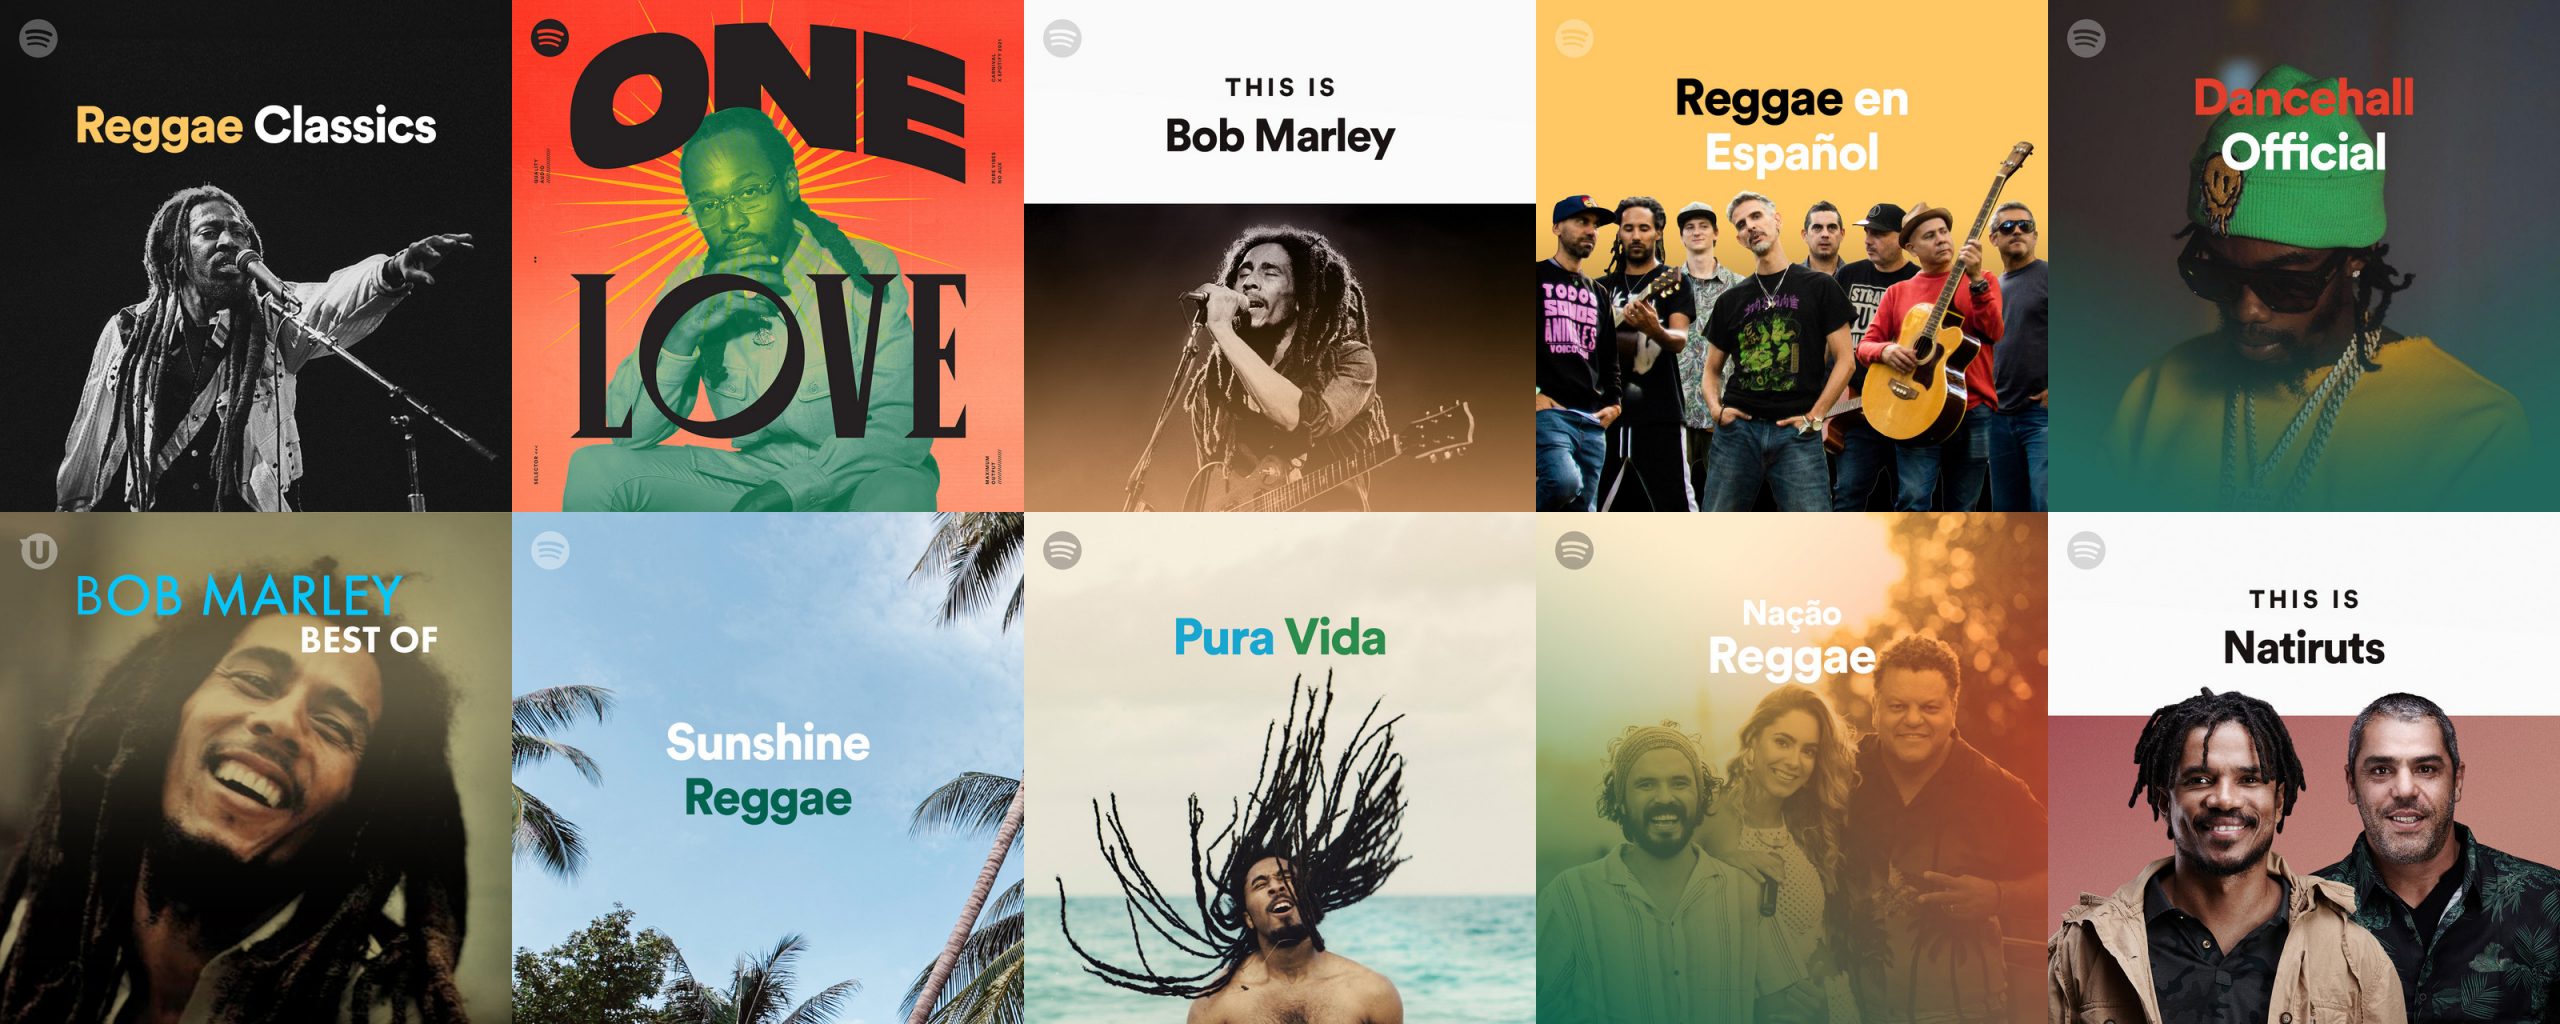 10 most-followed Spotify playlists for reggae music